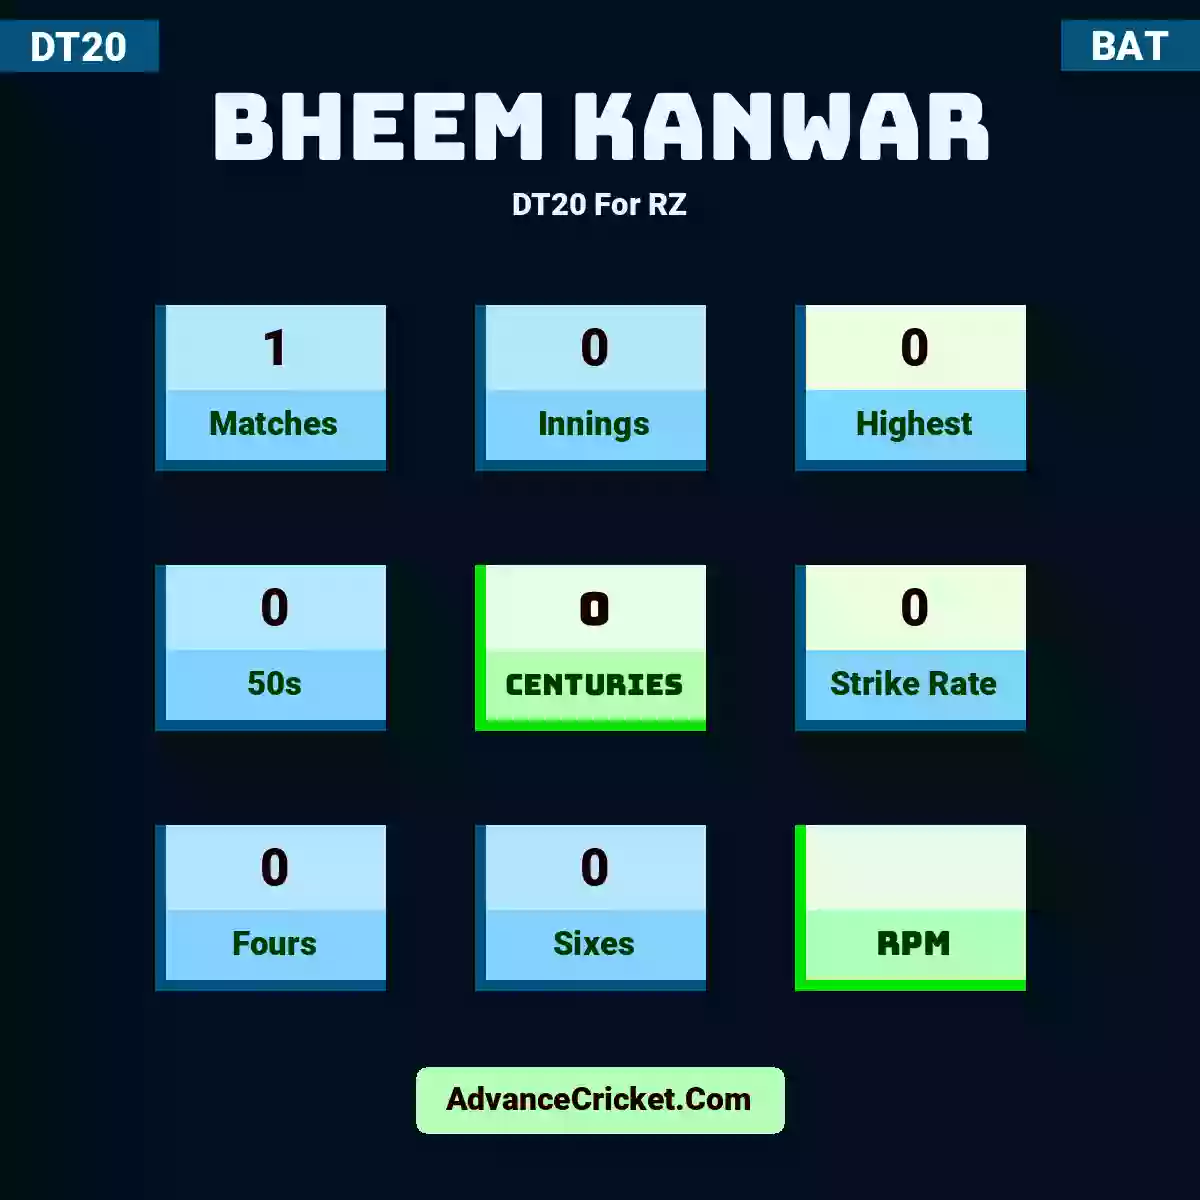 Bheem Kanwar DT20  For RZ, Bheem Kanwar played 1 matches, scored 0 runs as highest, 0 half-centuries, and 0 centuries, with a strike rate of 0. B.Kanwar hit 0 fours and 0 sixes.